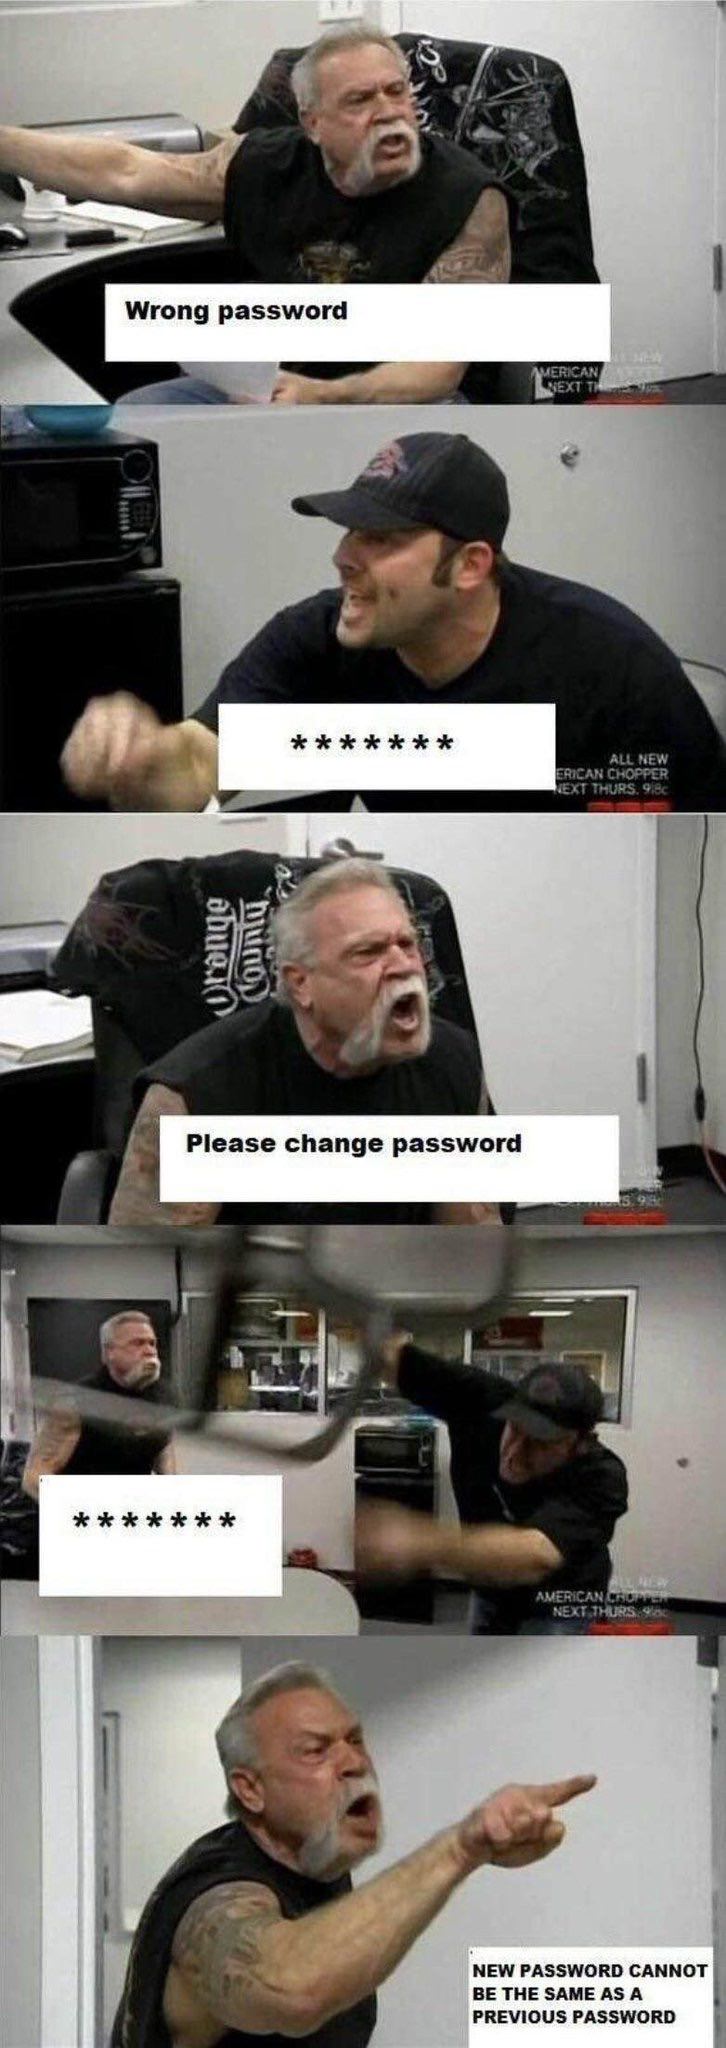 Barry resetting passwords